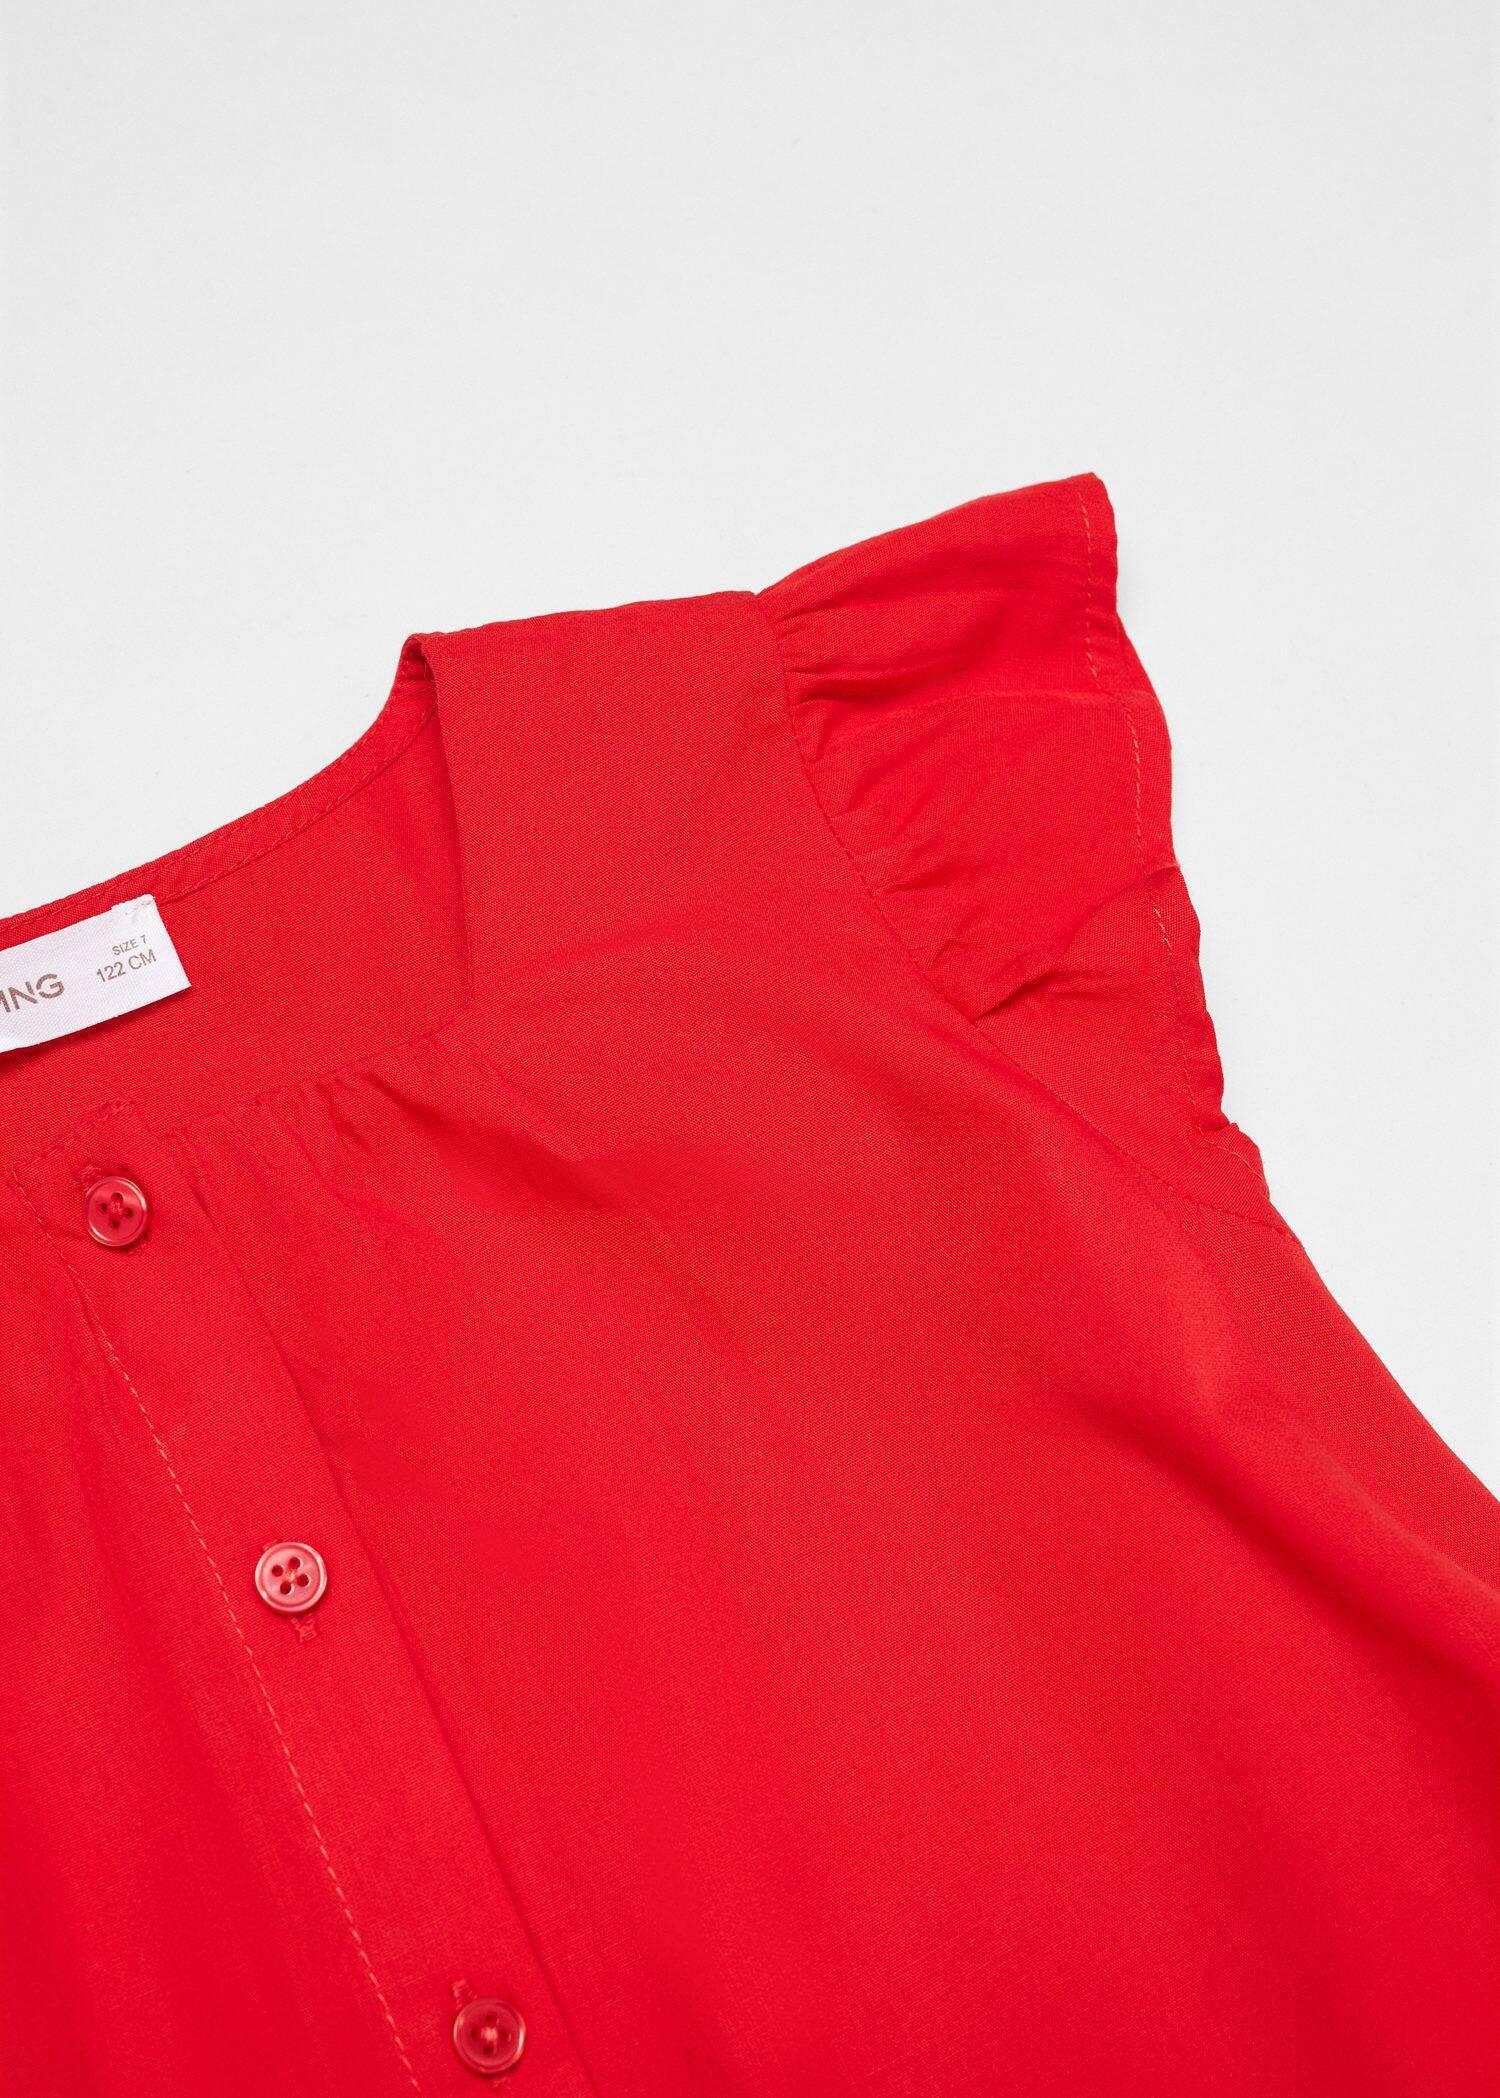 Mango - Red Buttoned Cotton Shirt, Kids Girls